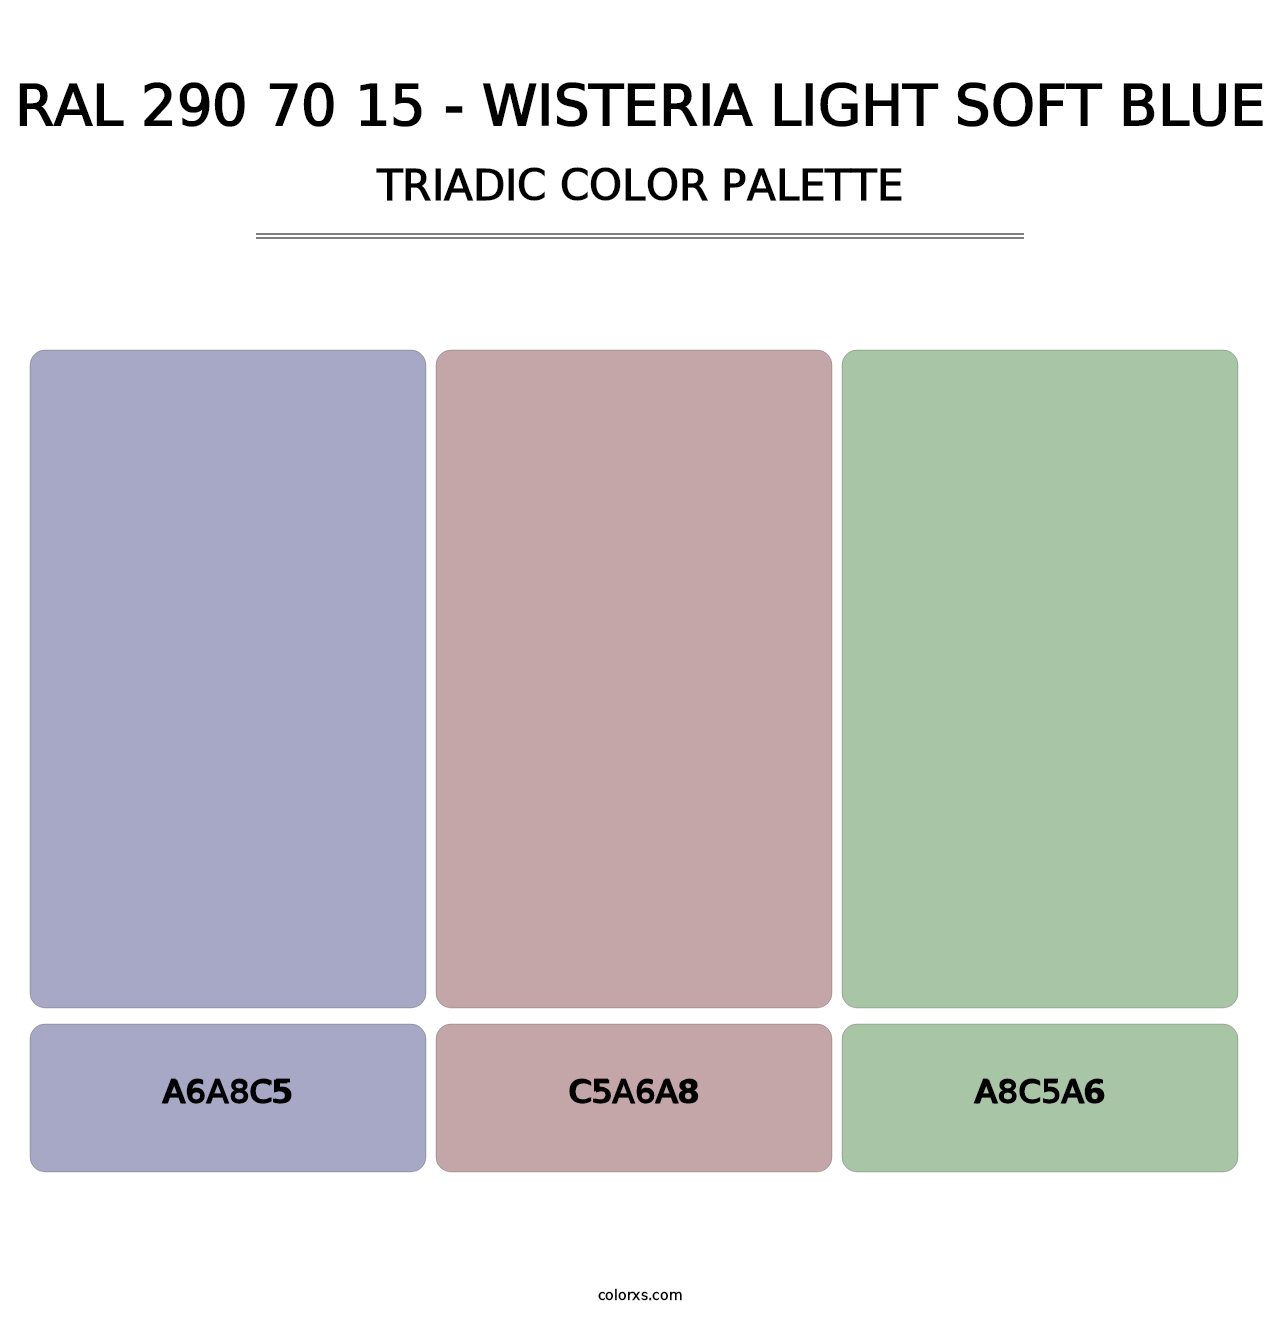 RAL 290 70 15 - Wisteria Light Soft Blue - Triadic Color Palette